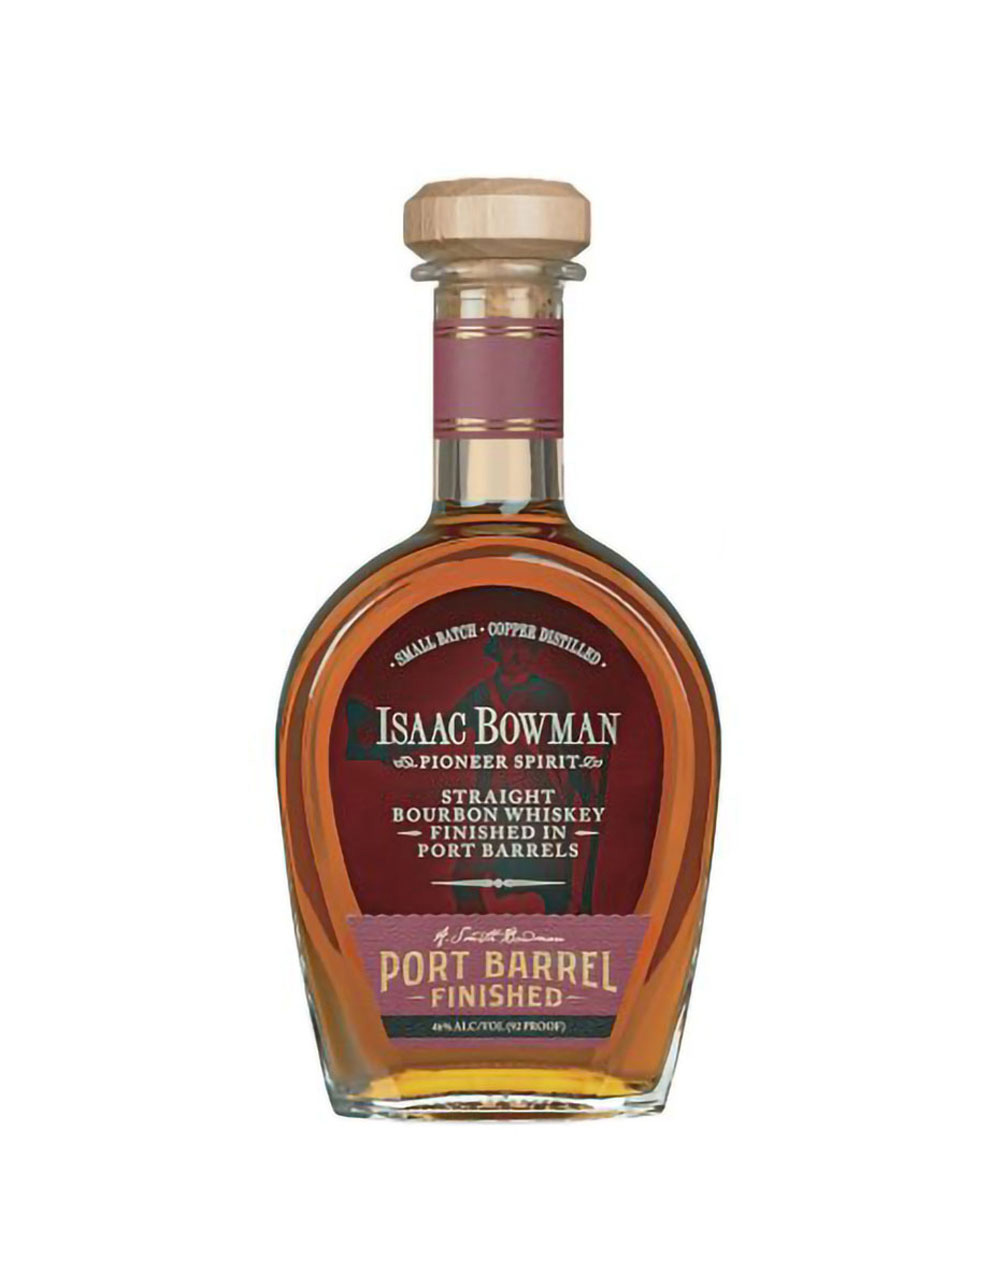 Bowman Brothers Port Barrel Finished Bourbon Whiskey